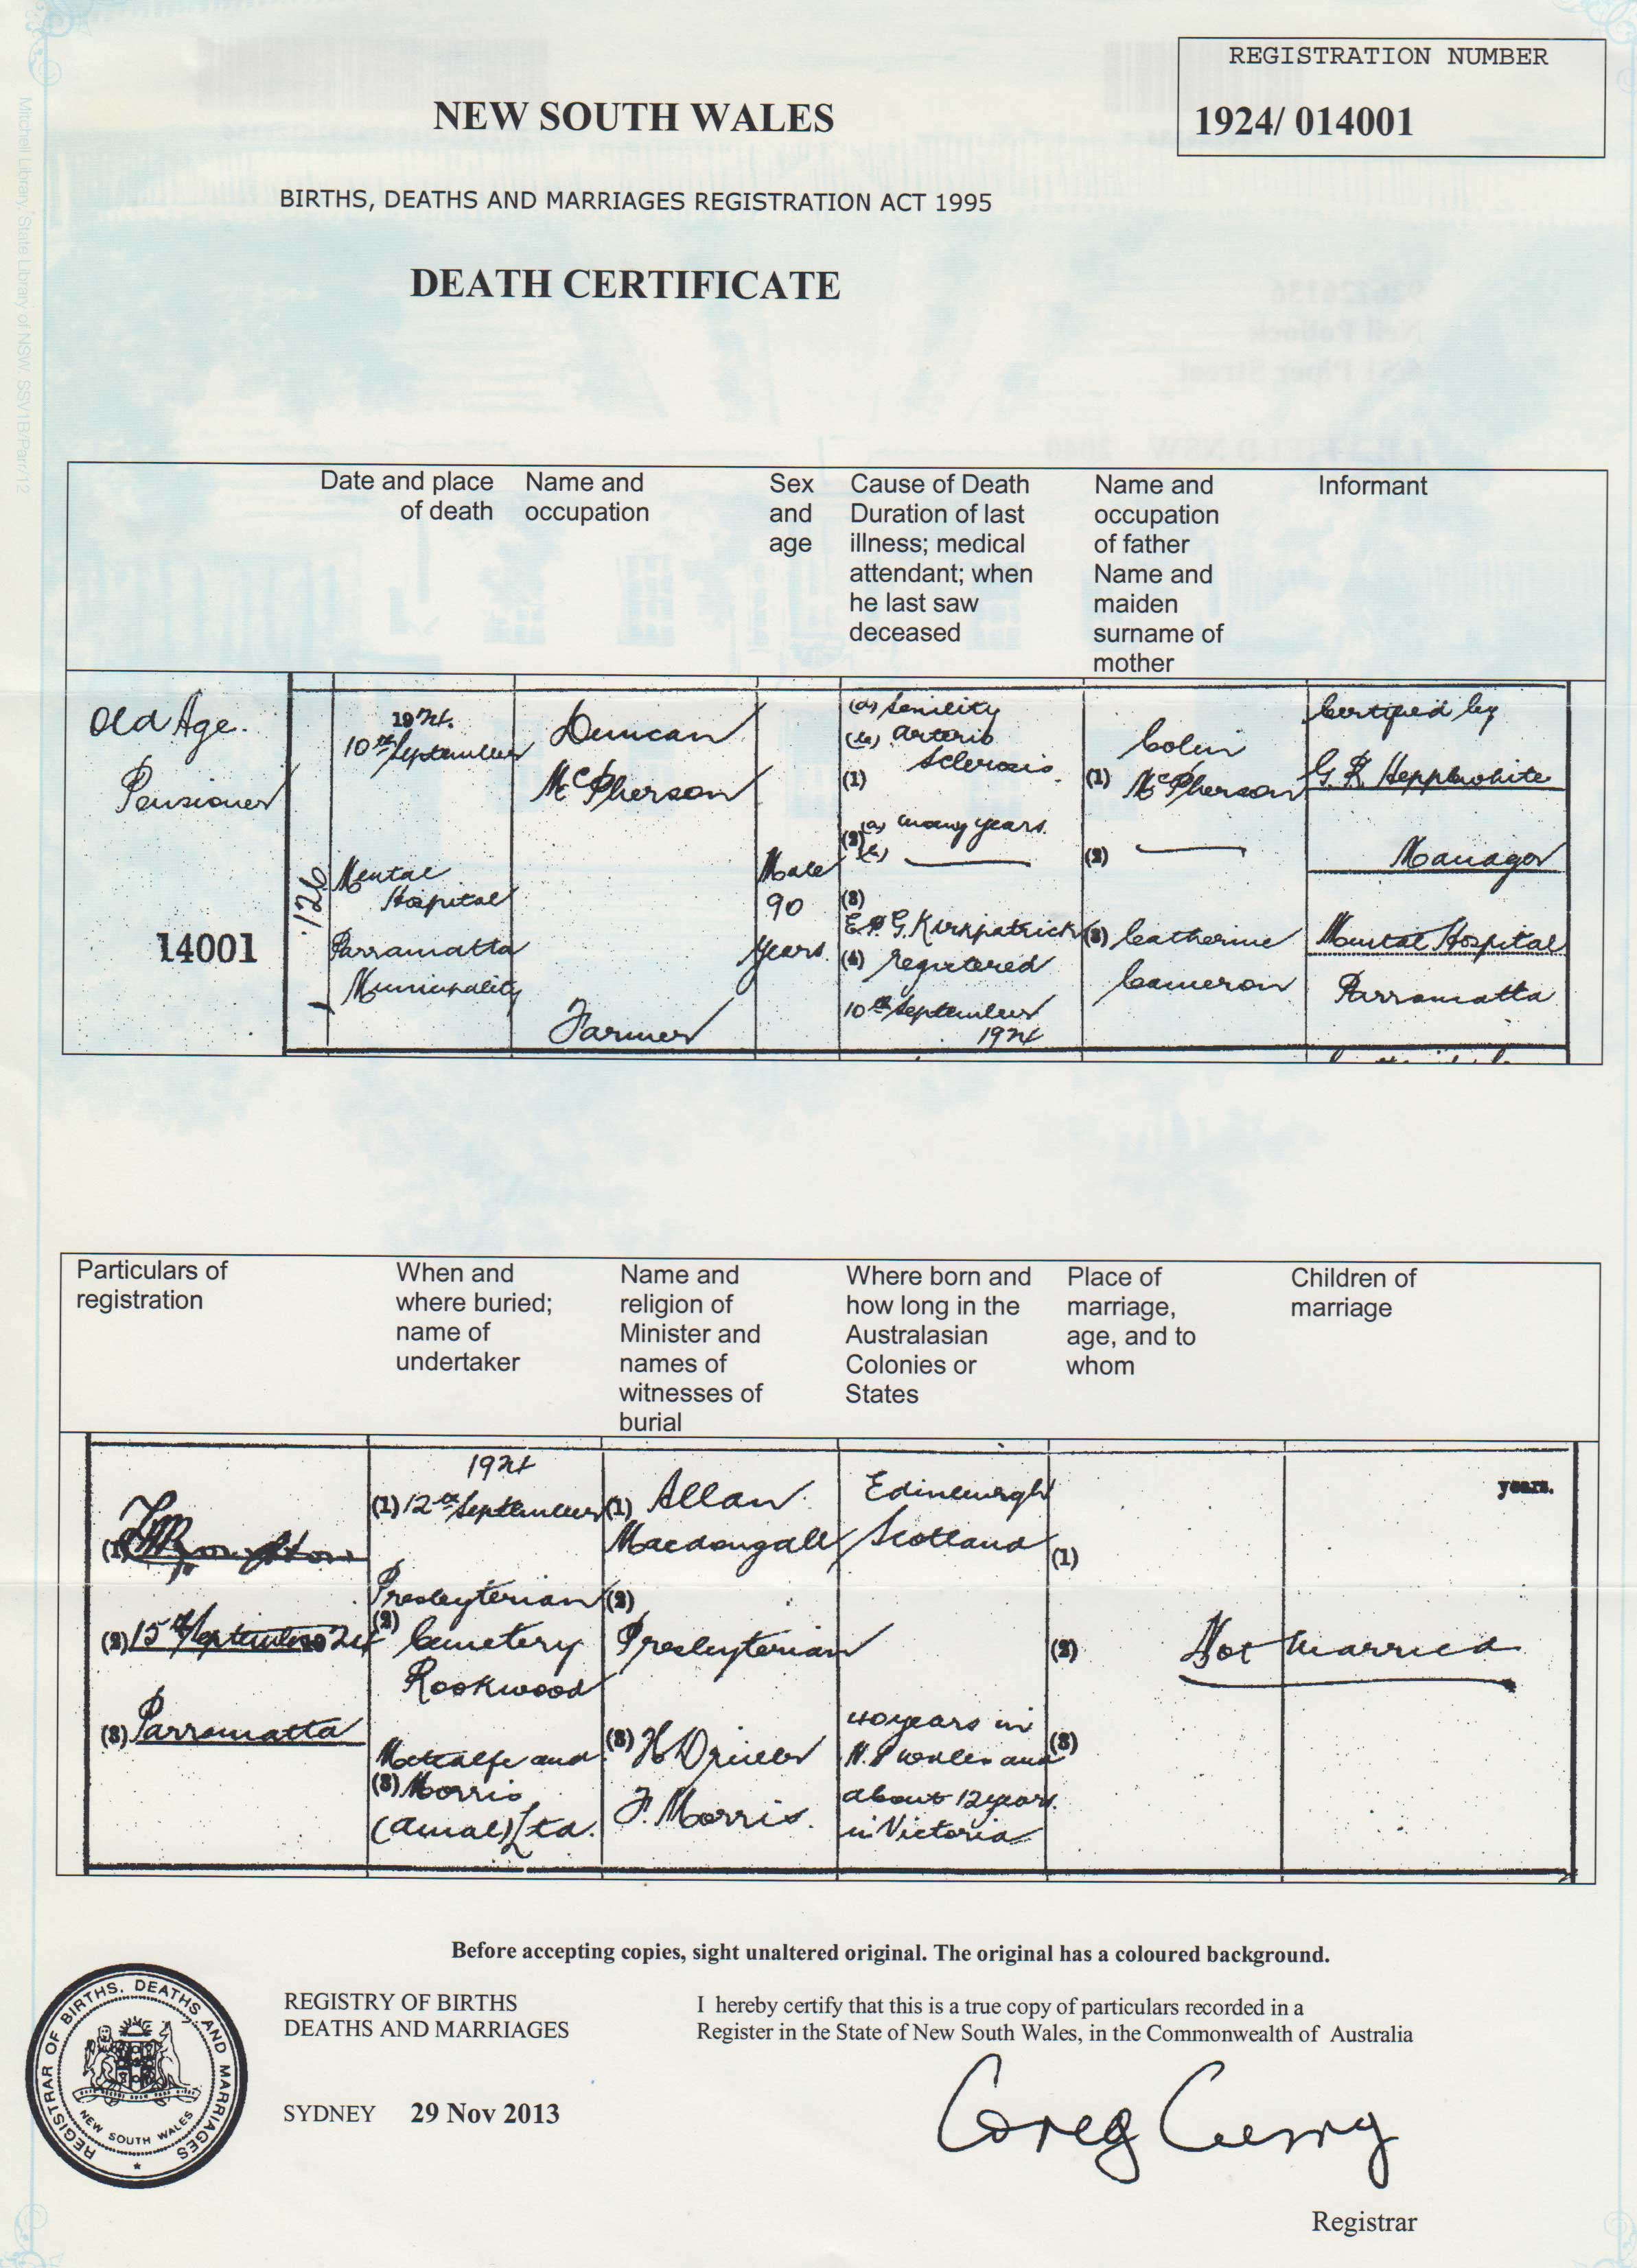 Duncan McPherson death certificate 1924